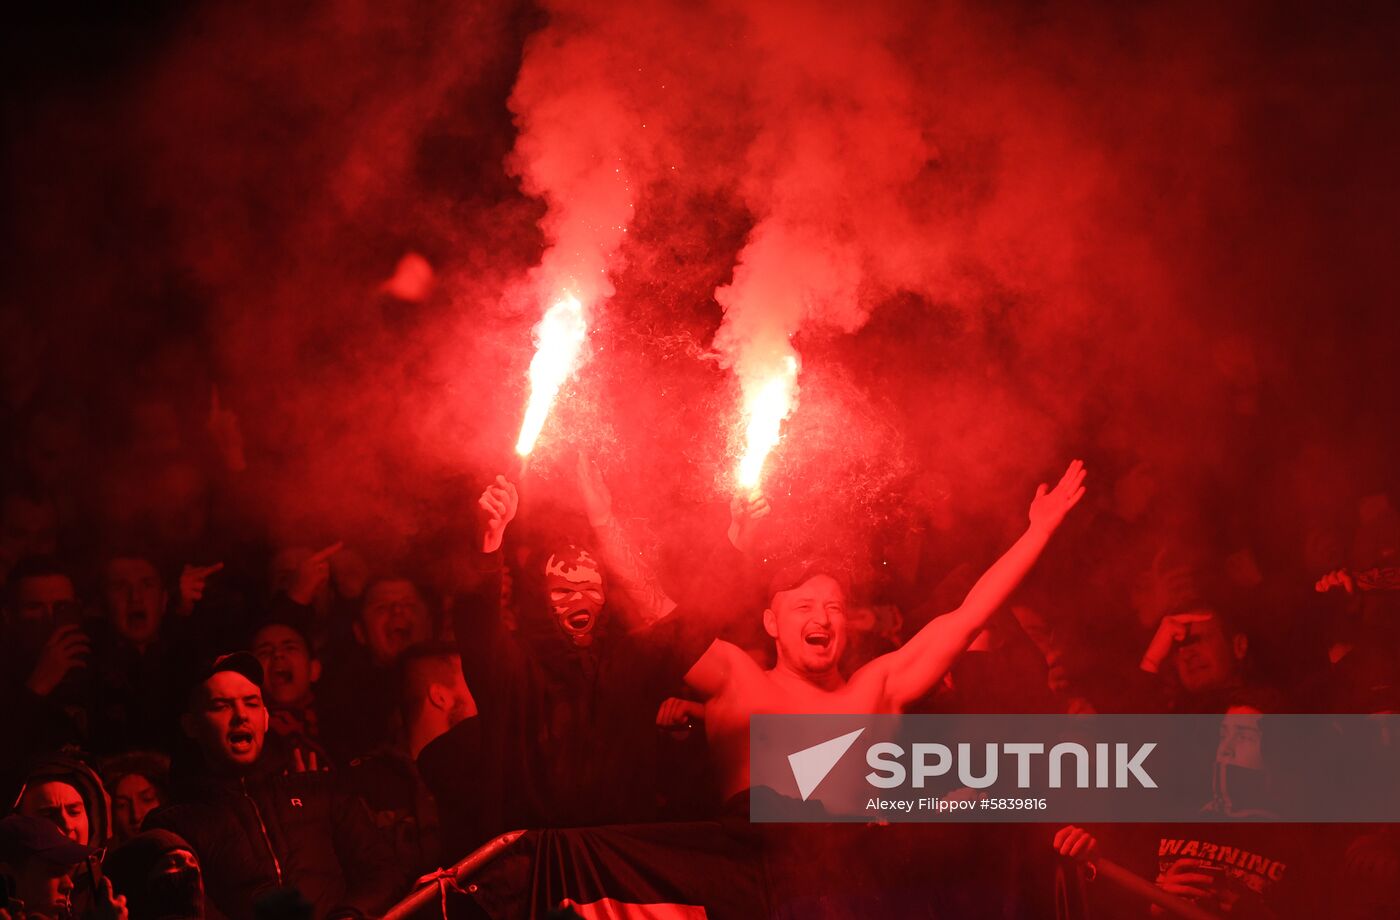 Russia Soccer Premier-League Spartak - CSKA